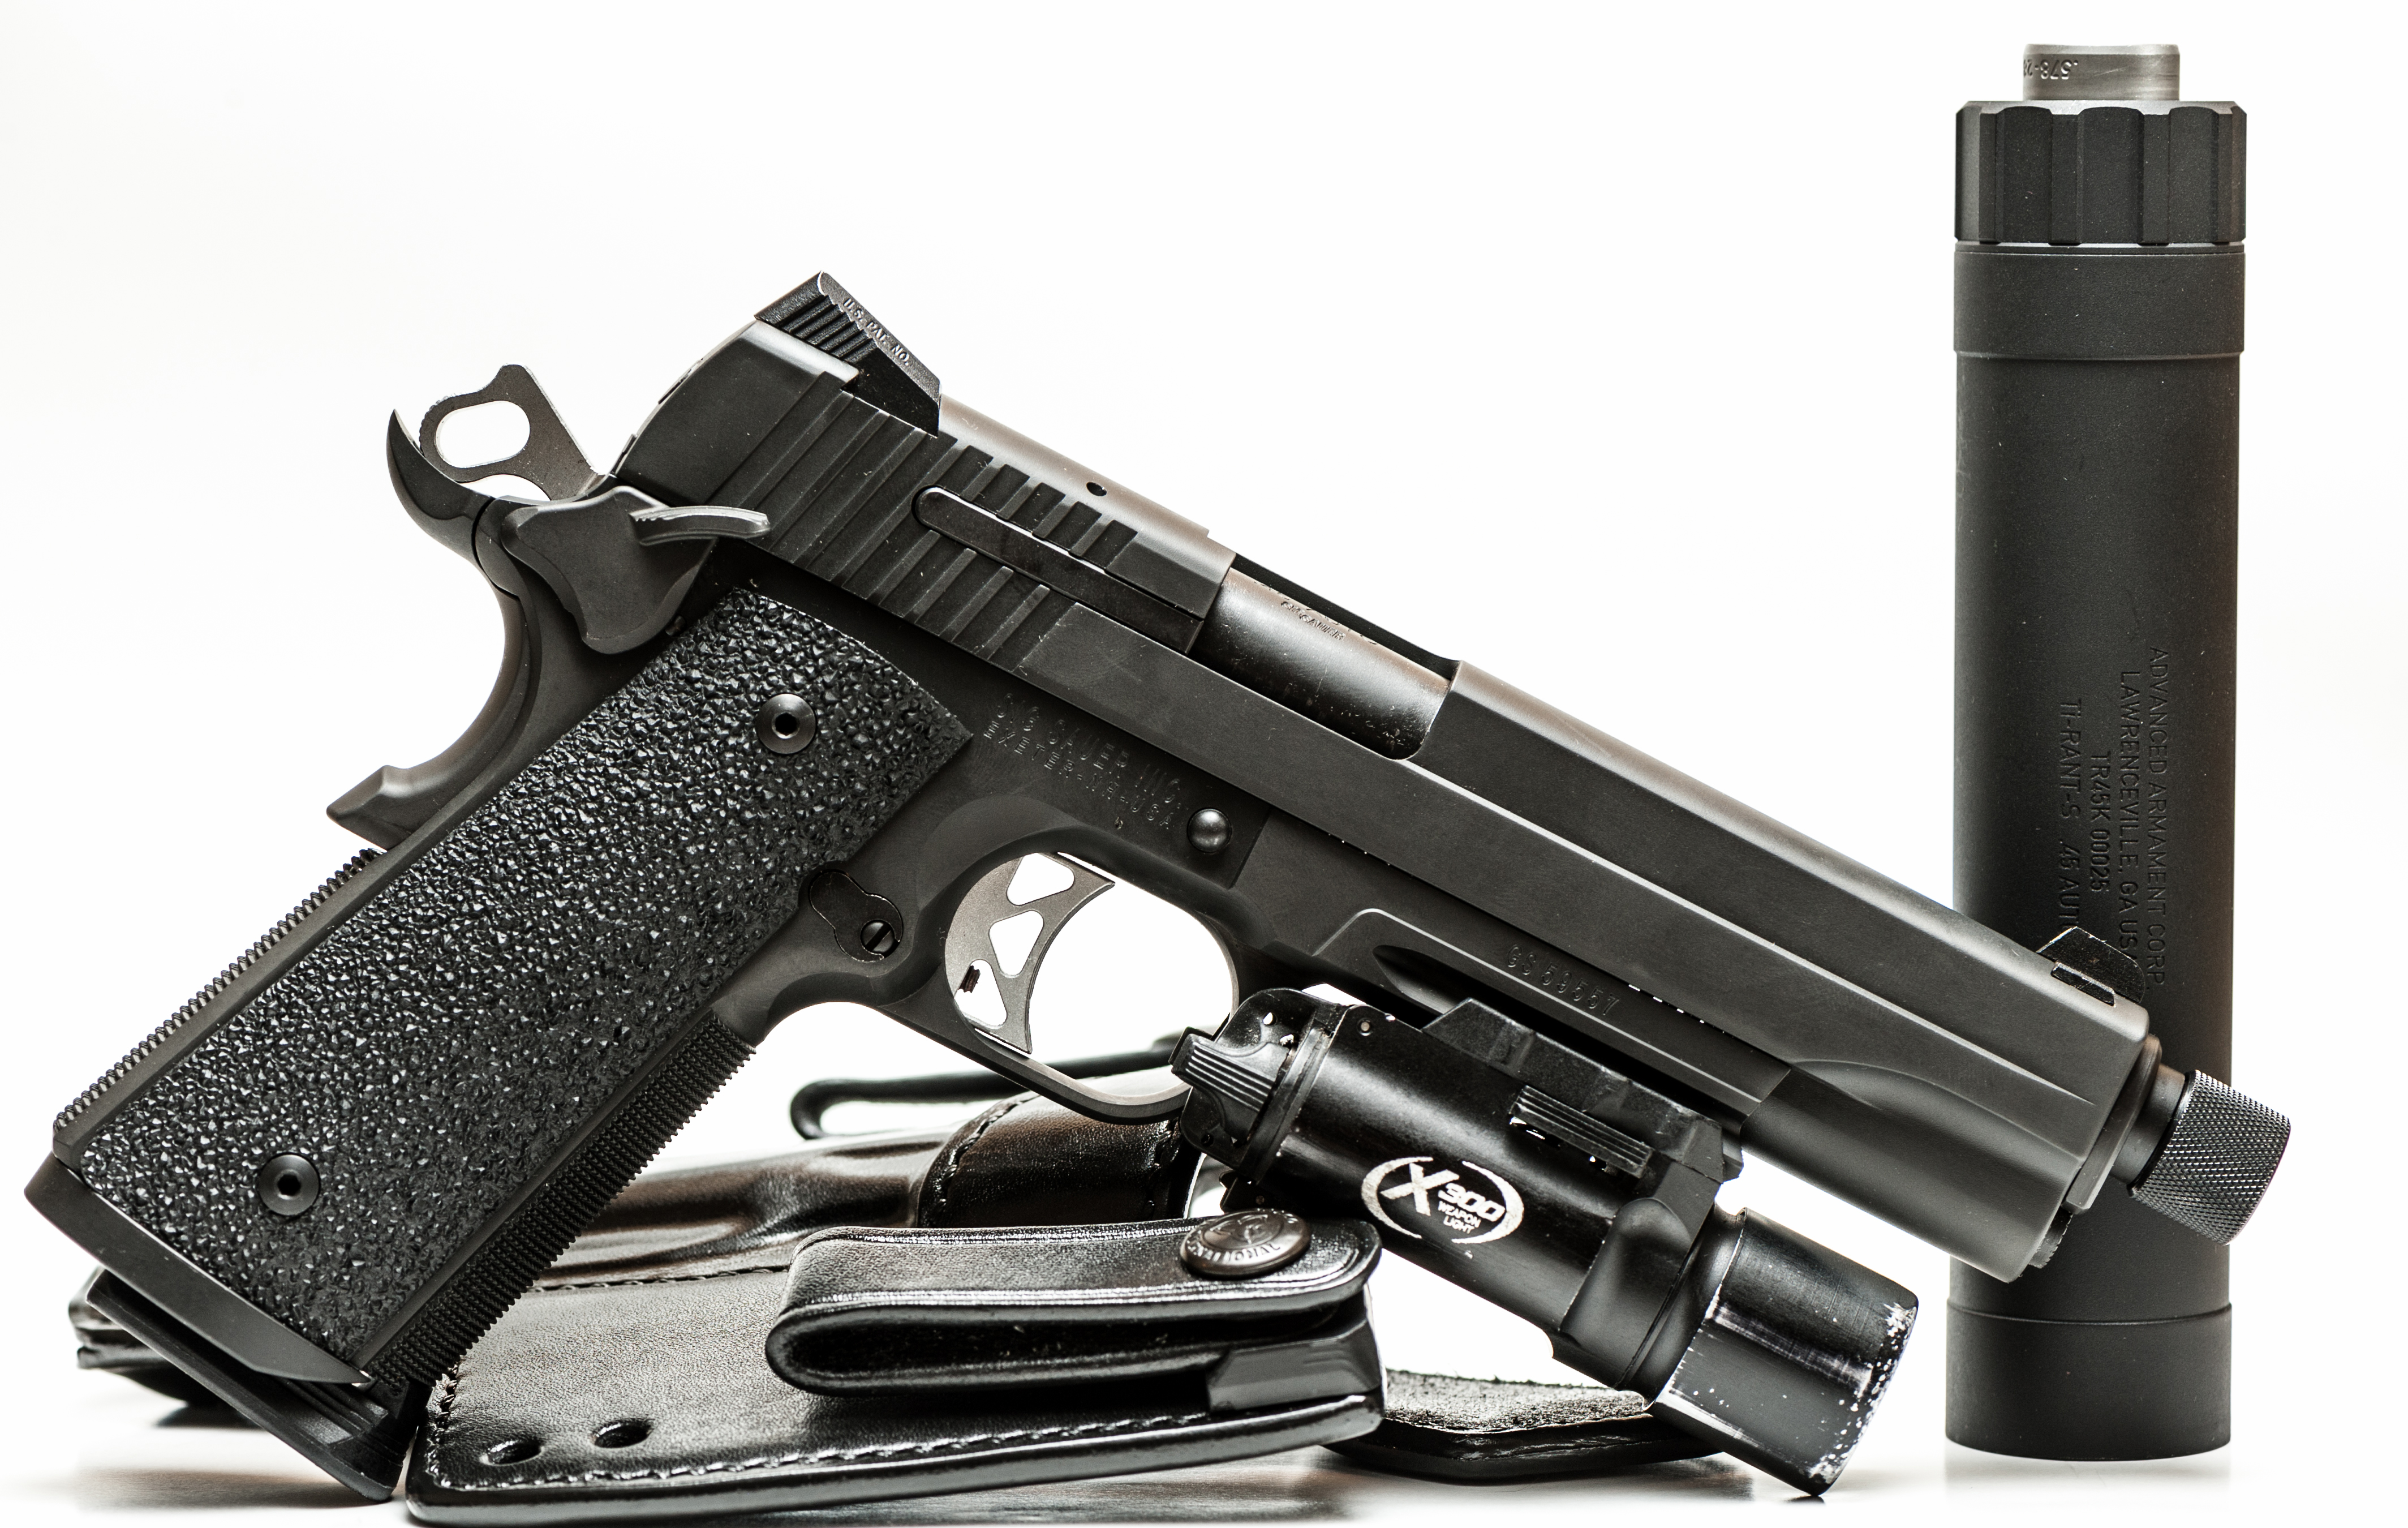 Sig Sauer Pistol 4k Ultra HD Wallpaper Background Image